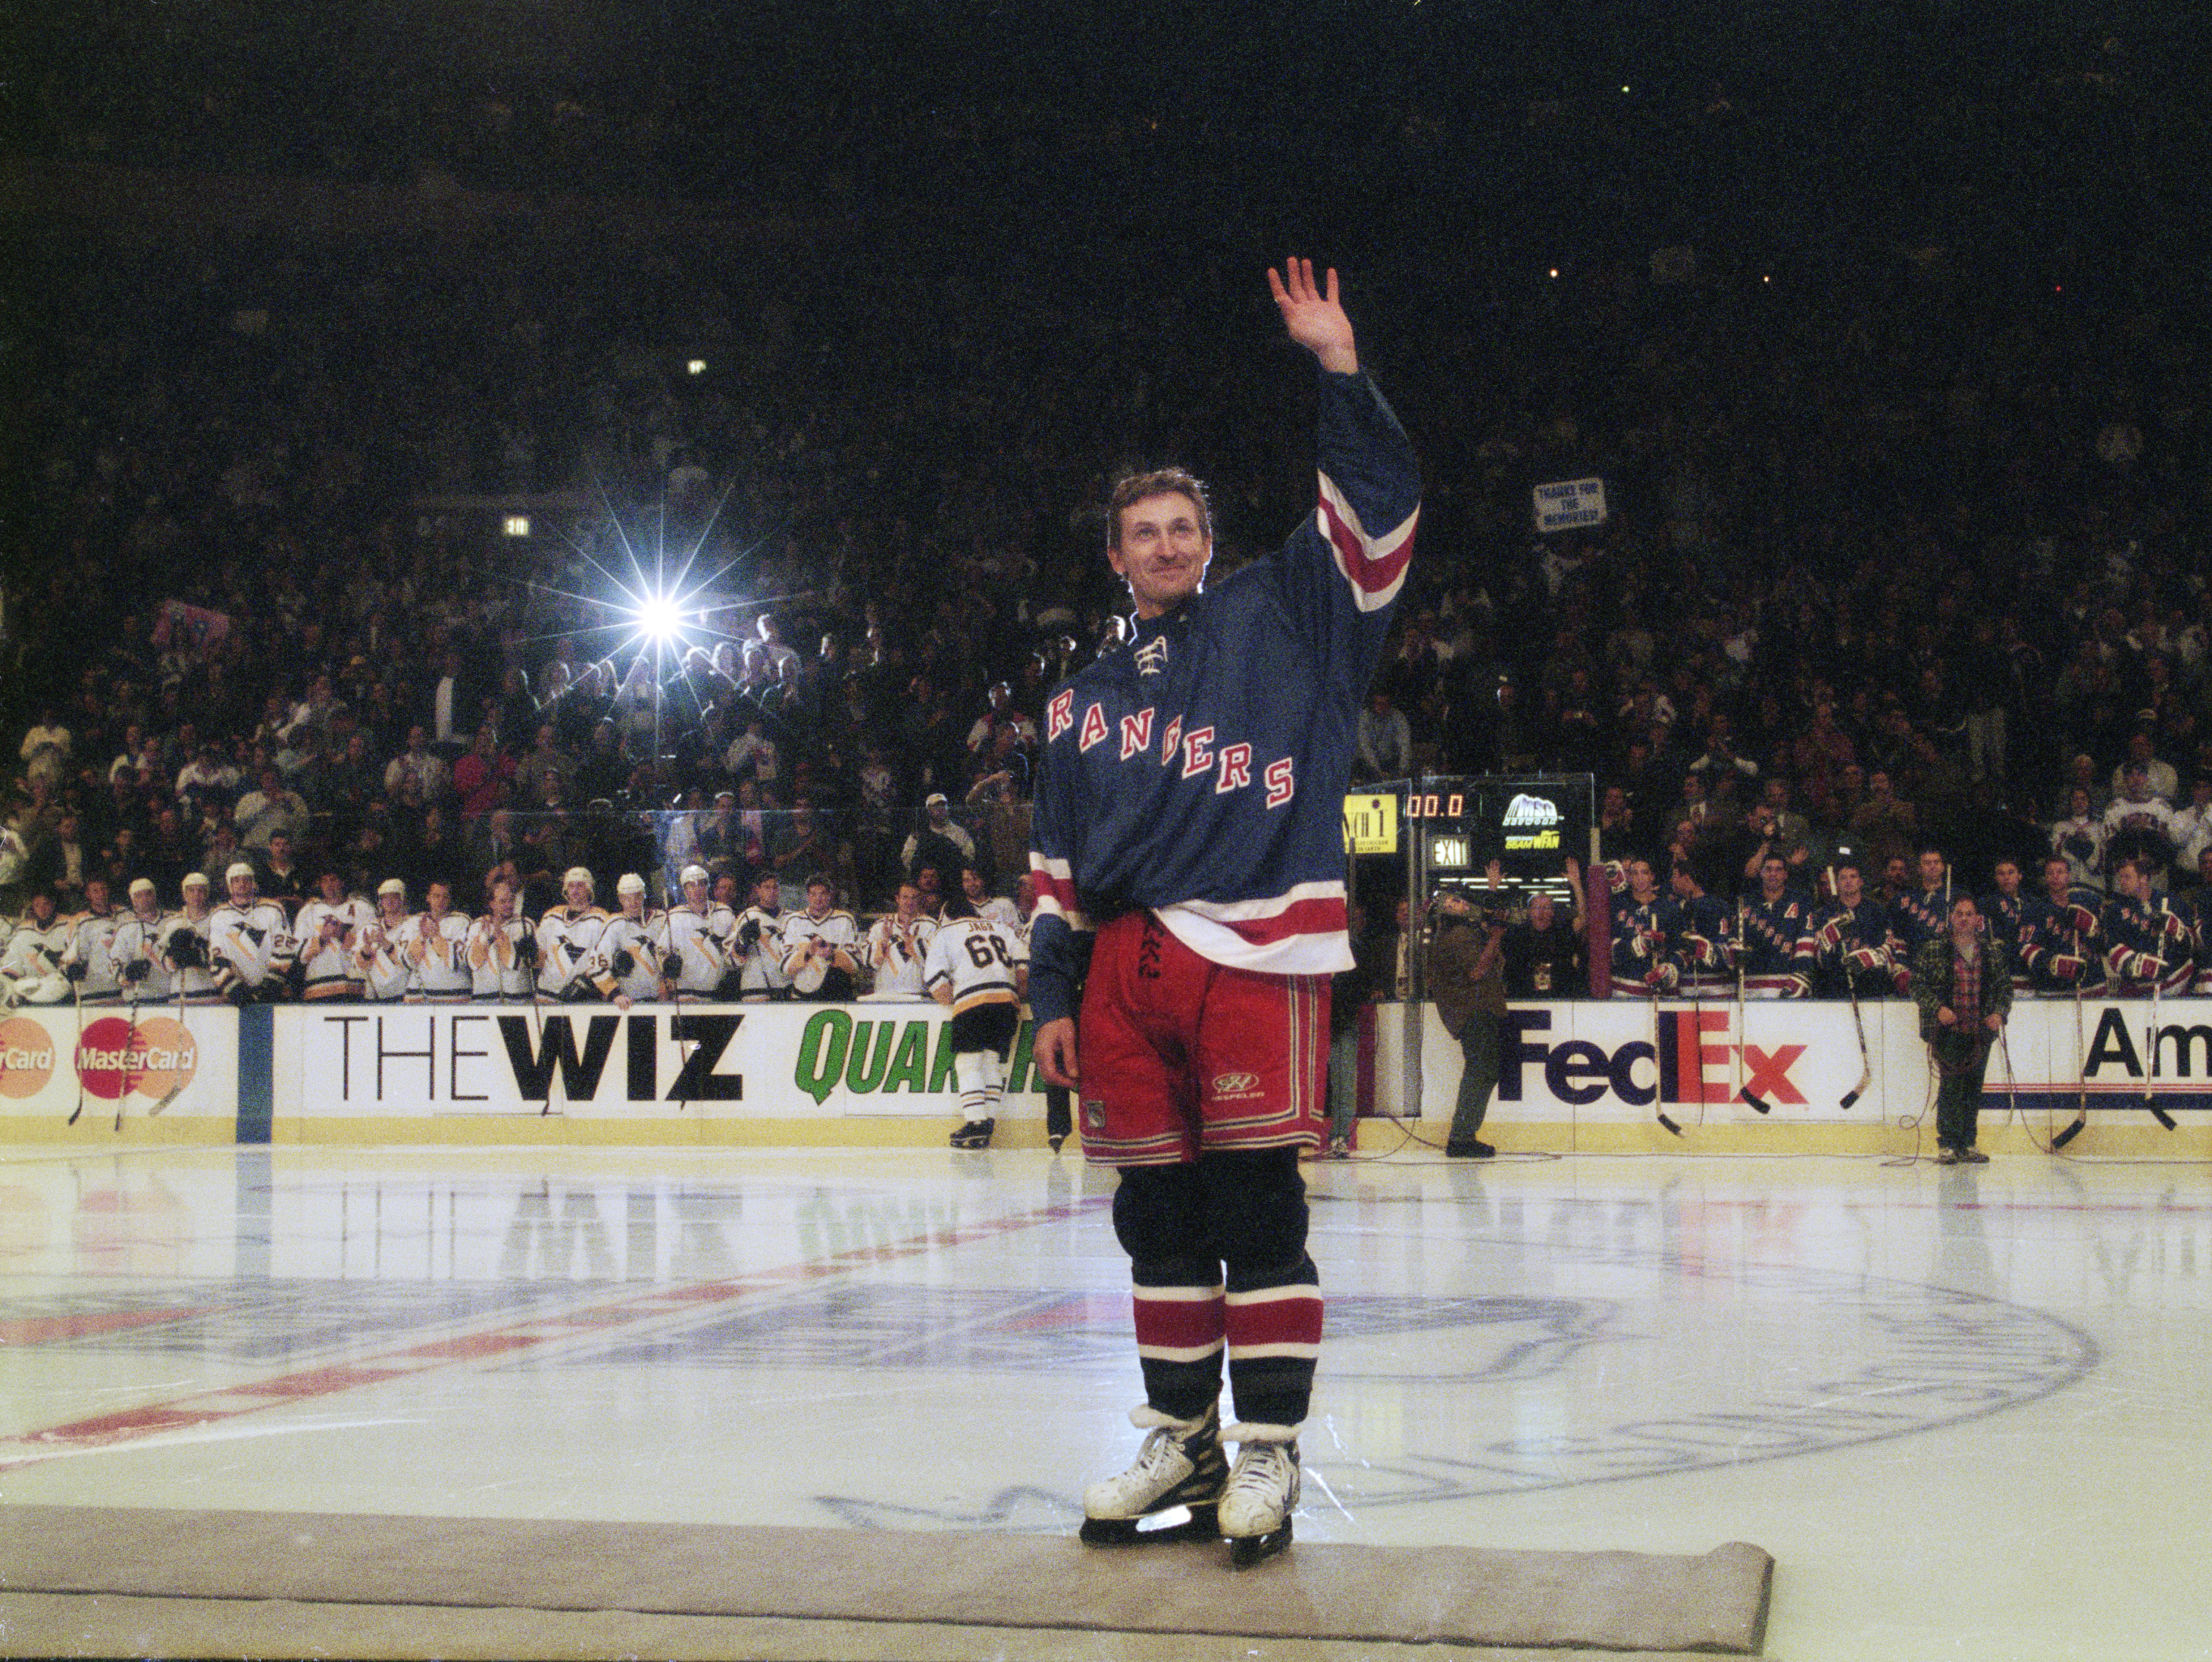 Wayne Gretzky Highlights, The Greatest One 